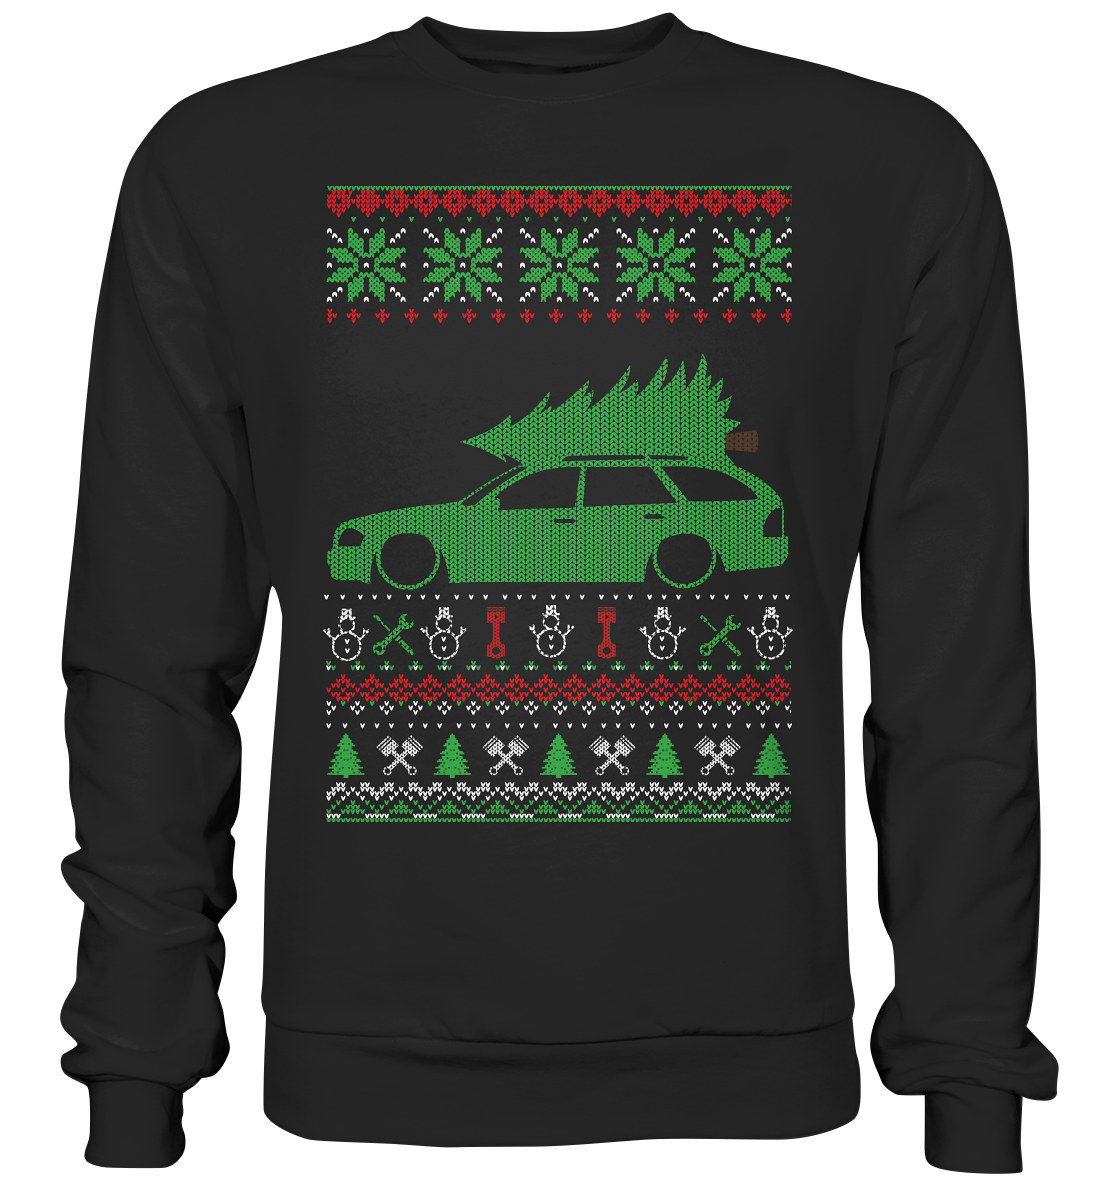 CODUGLY_MGKW202T - Premium Sweatshirt